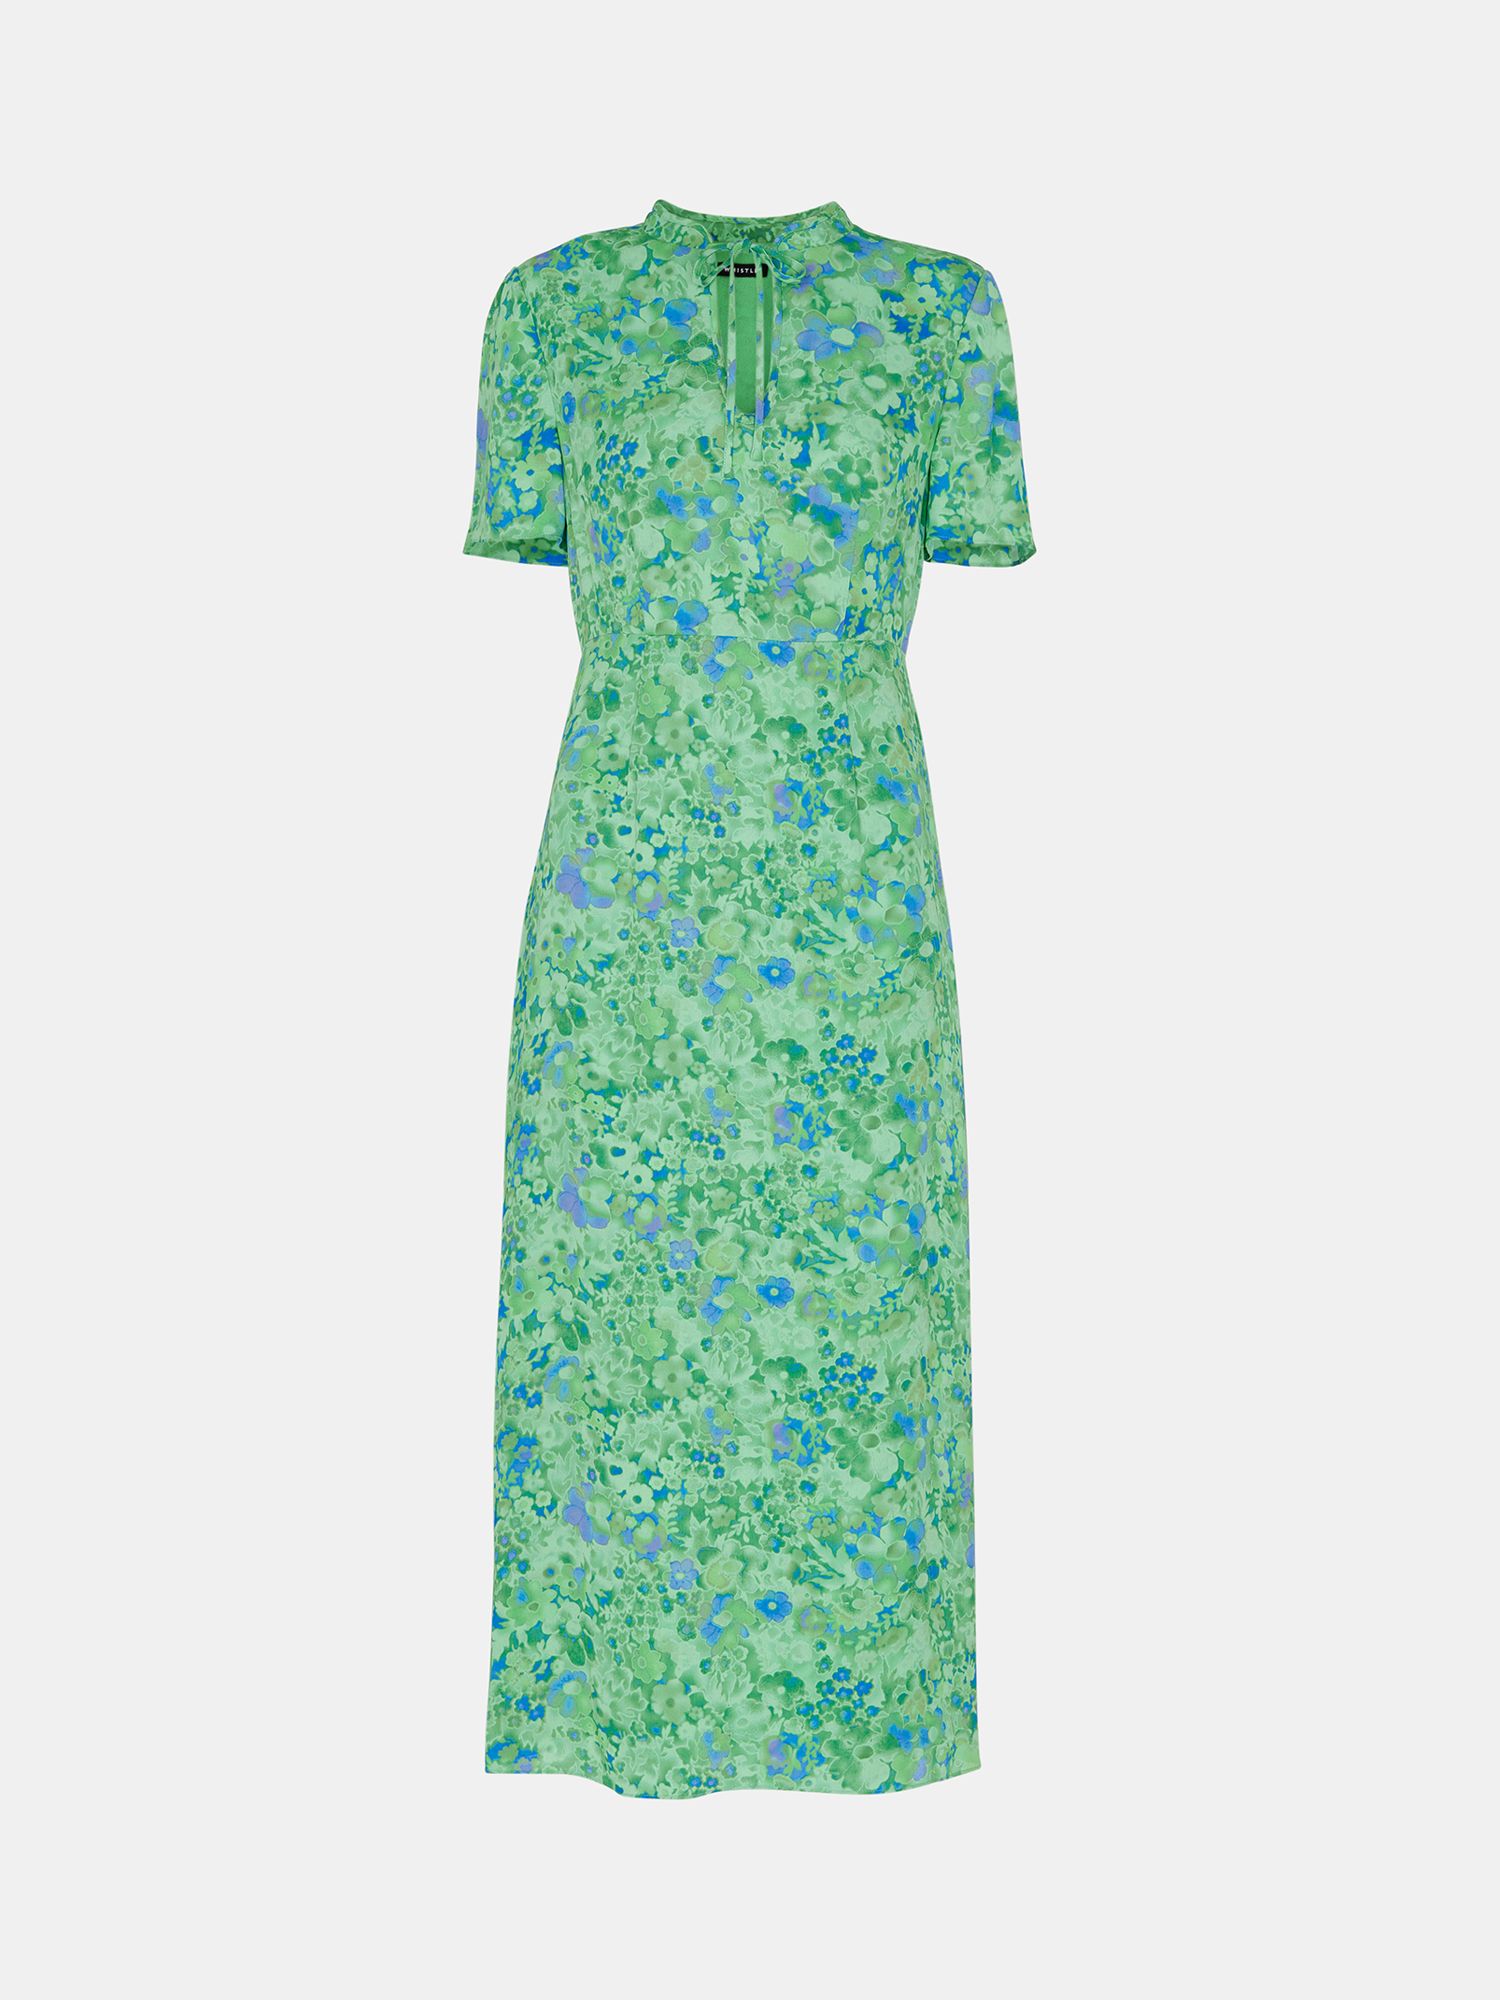 Whistles Lucid Floral Bonnie Dress, Green/Multi, 6